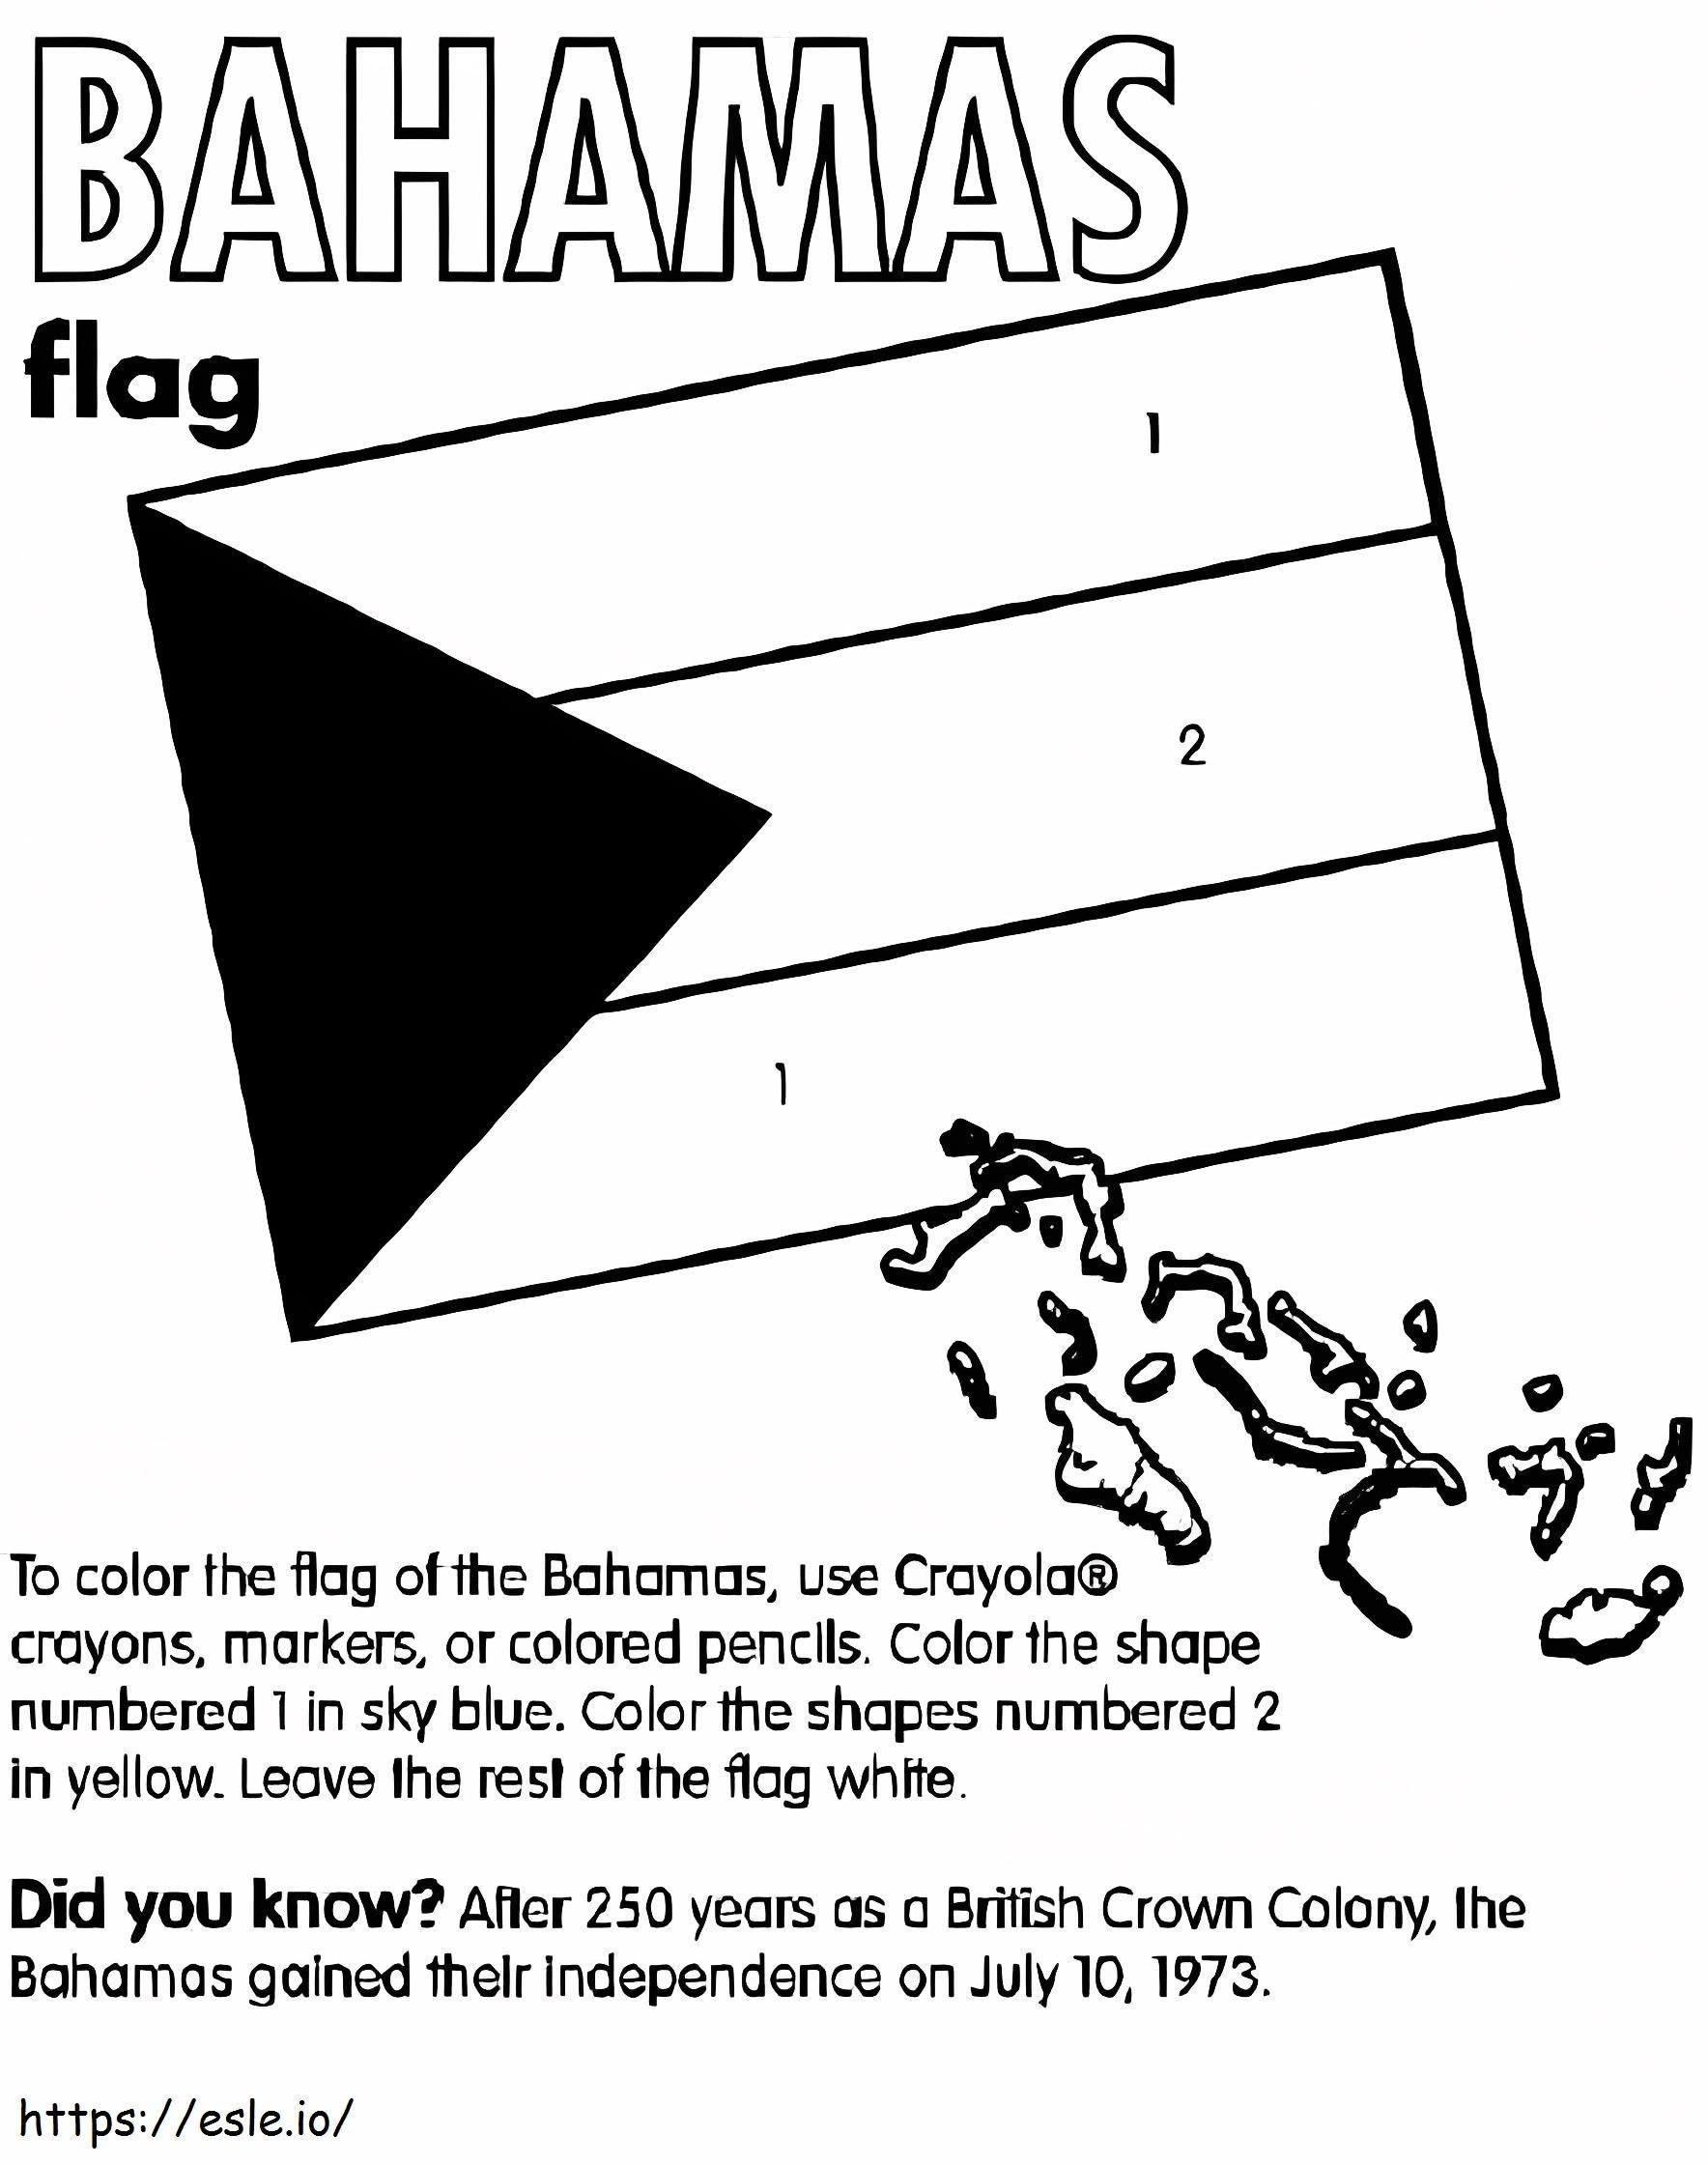 Bahamas Flag And Map coloring page